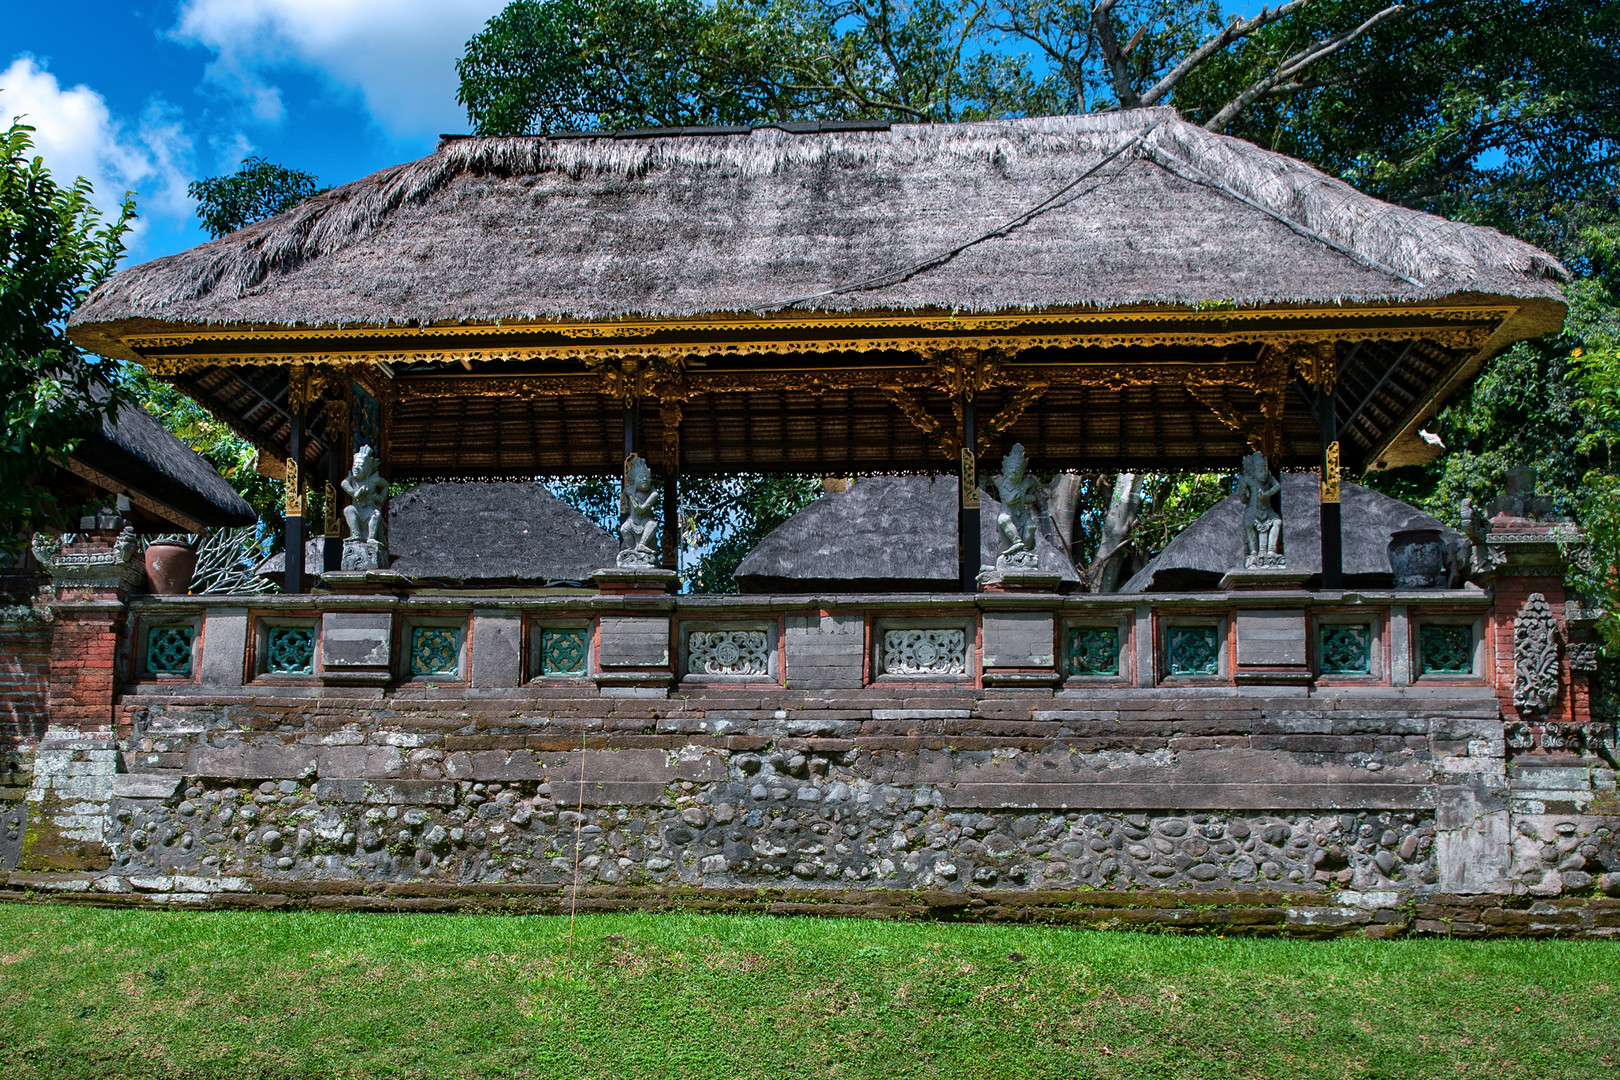 Meditation pavilion in Taman Ayun